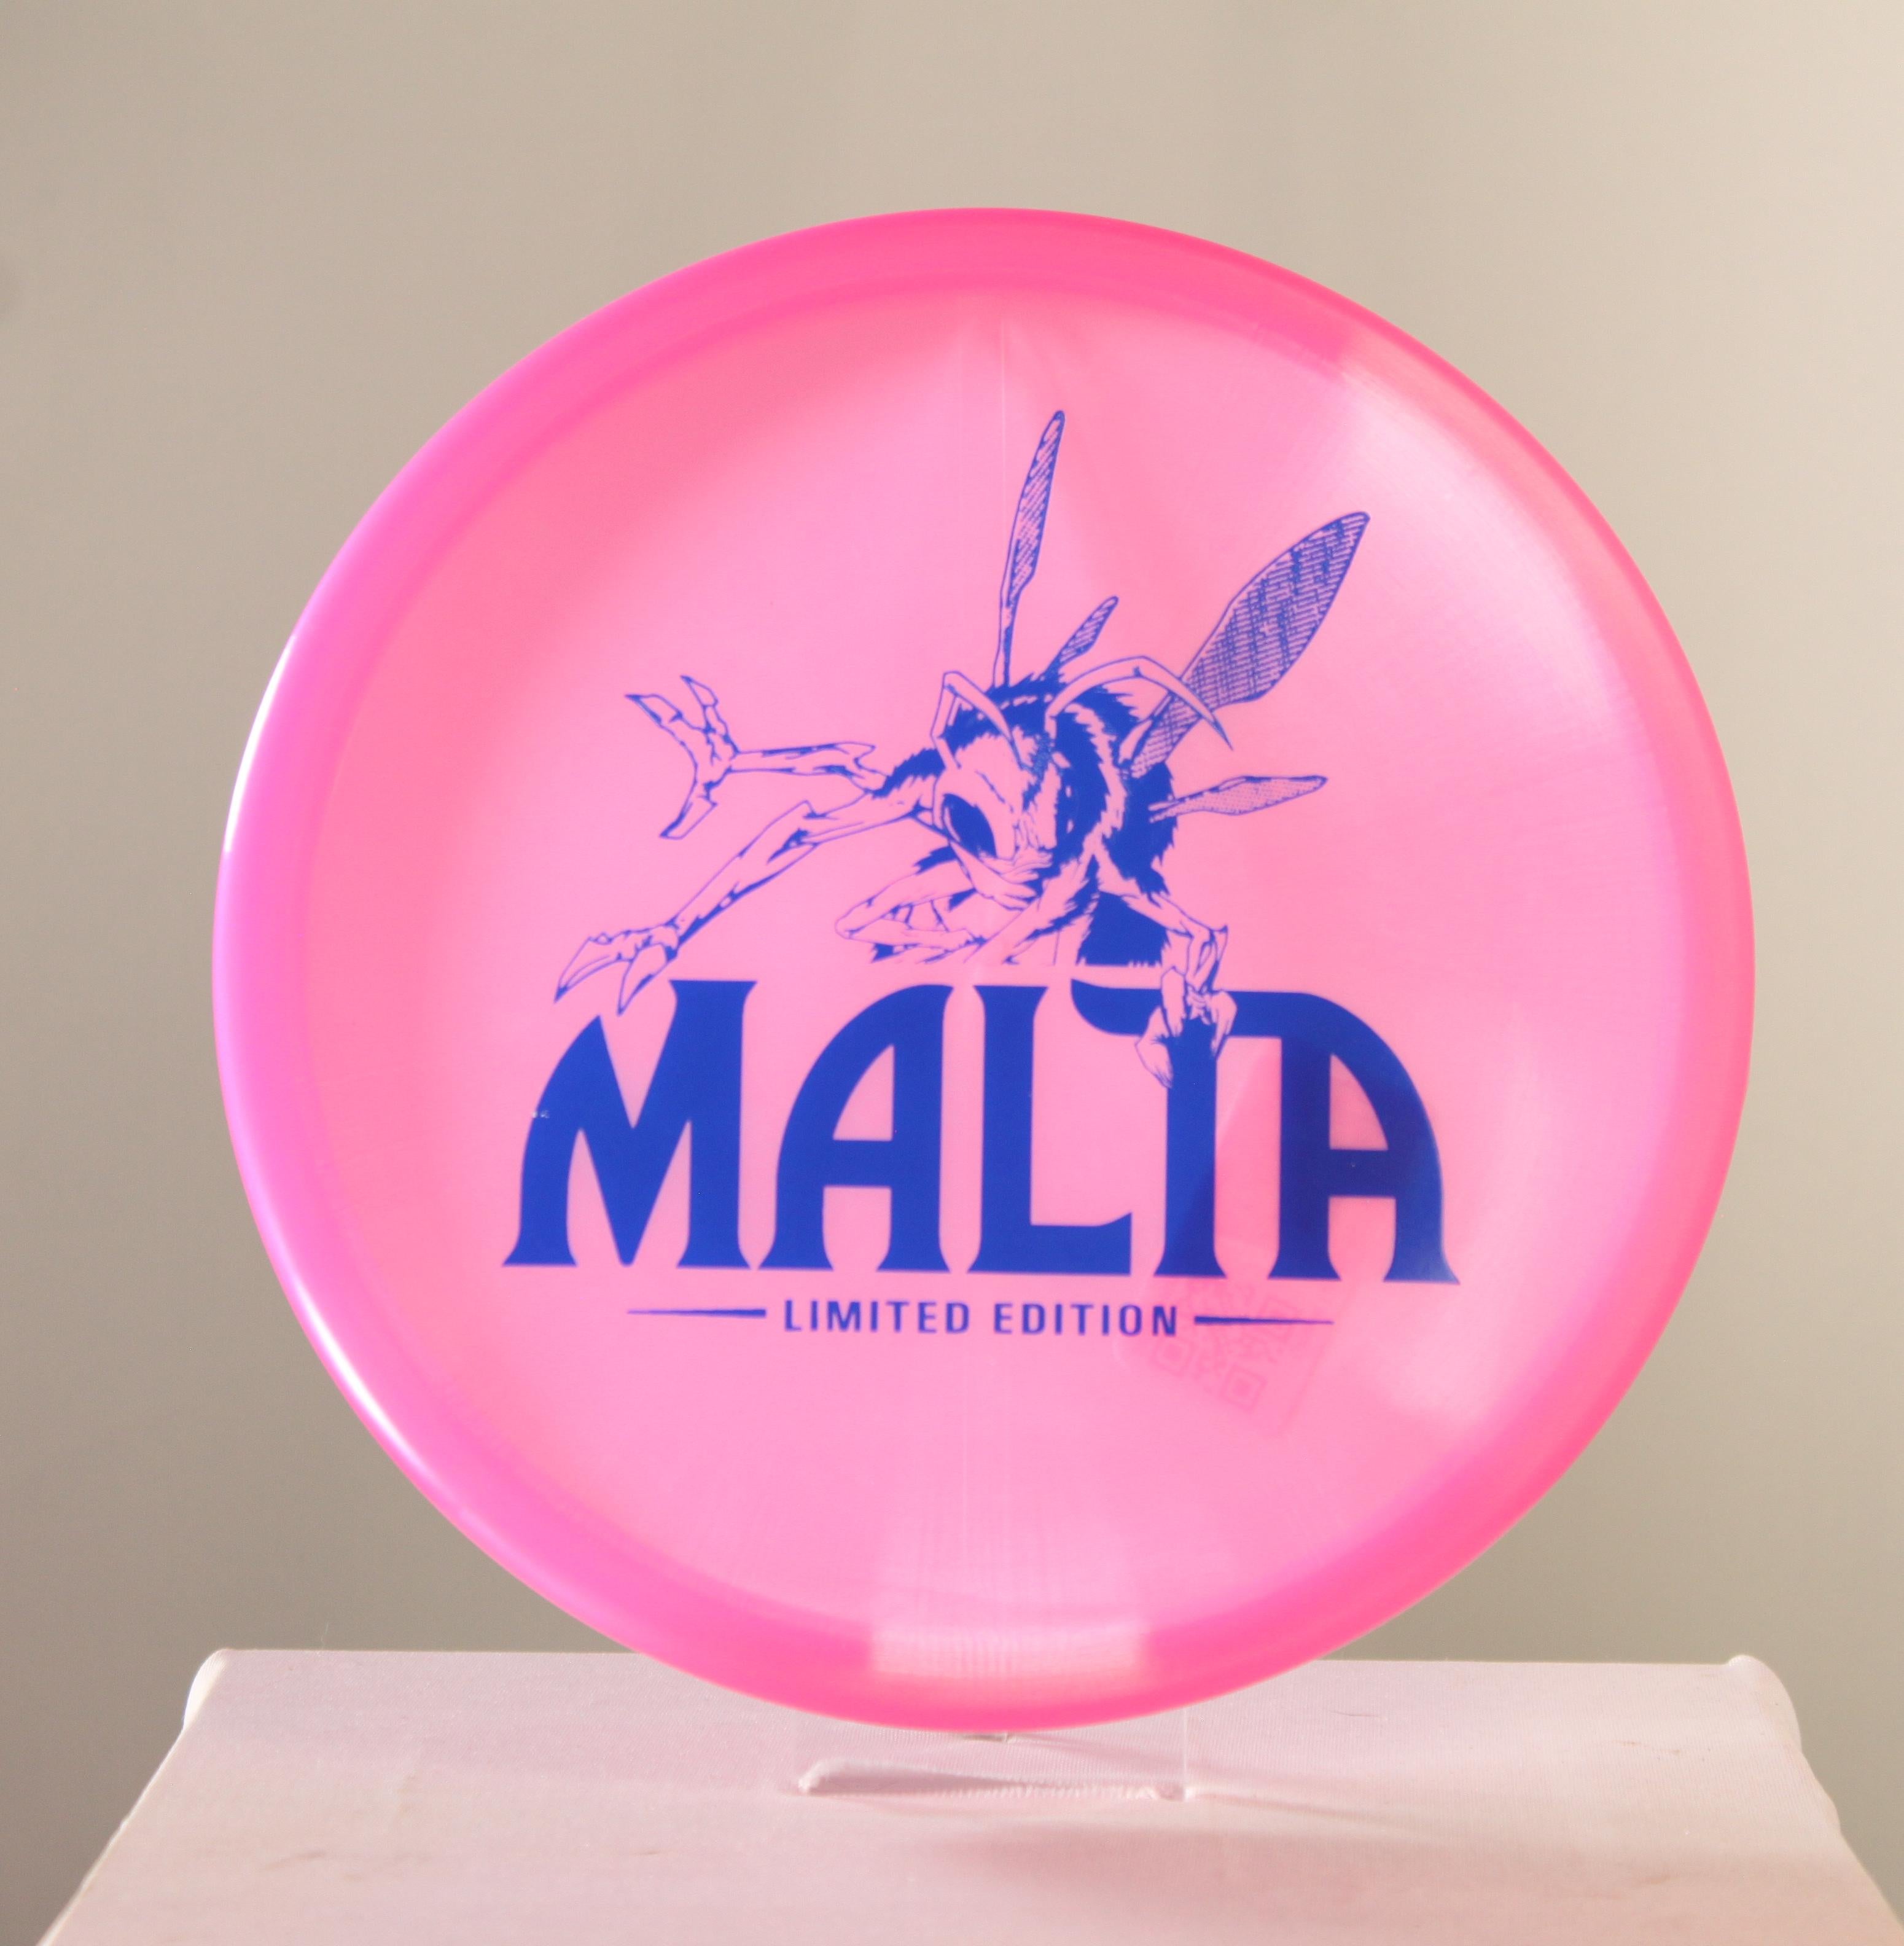 Limited Edition Big Z Malta